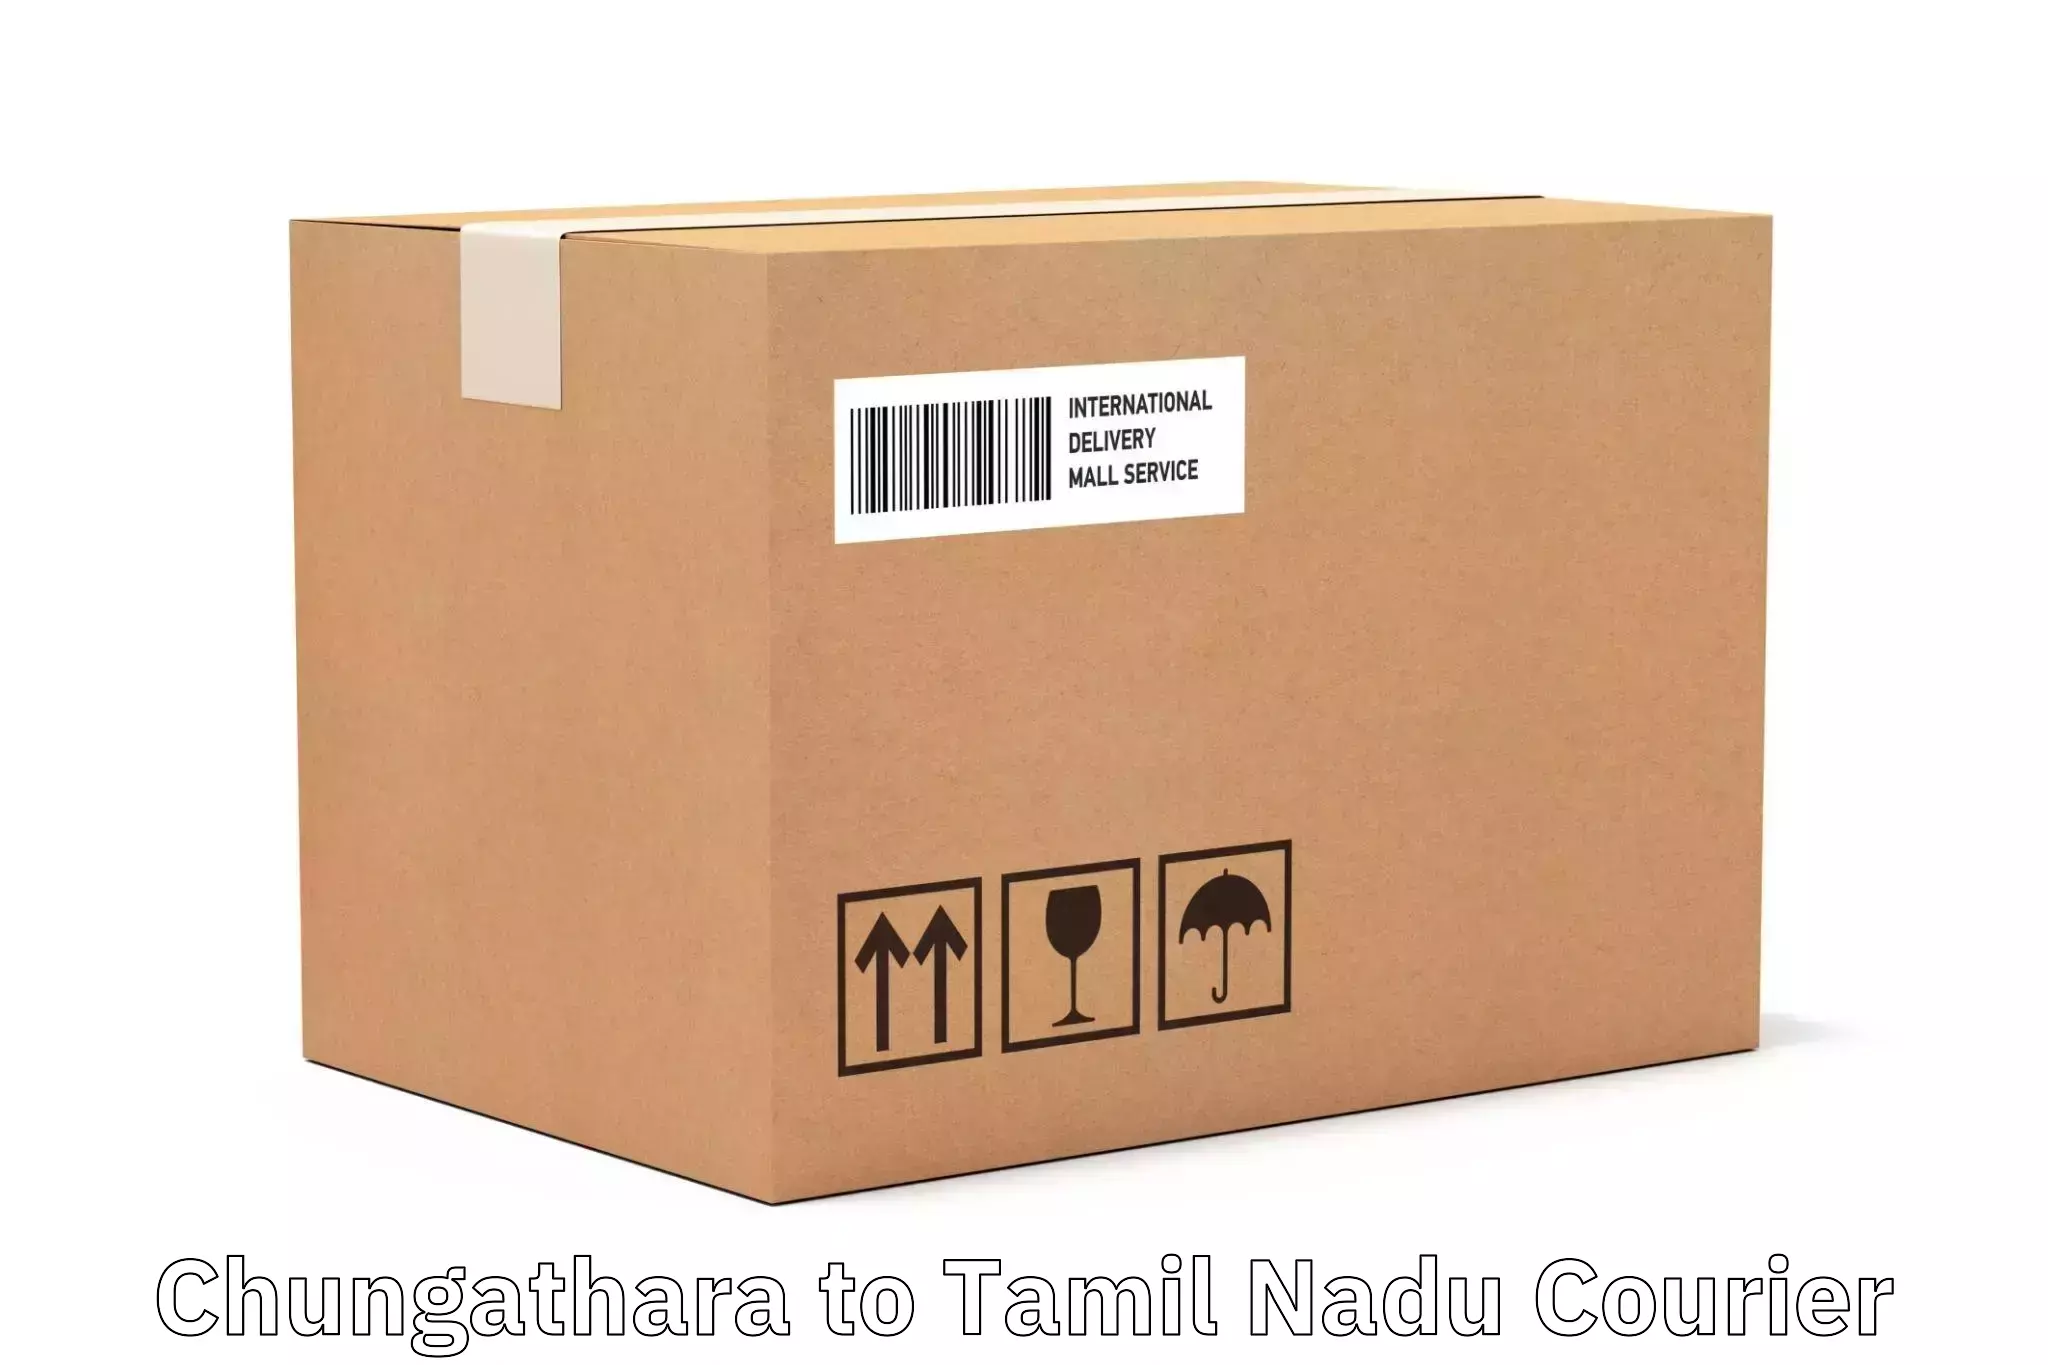 State-of-the-art courier technology Chungathara to Ambasamudram